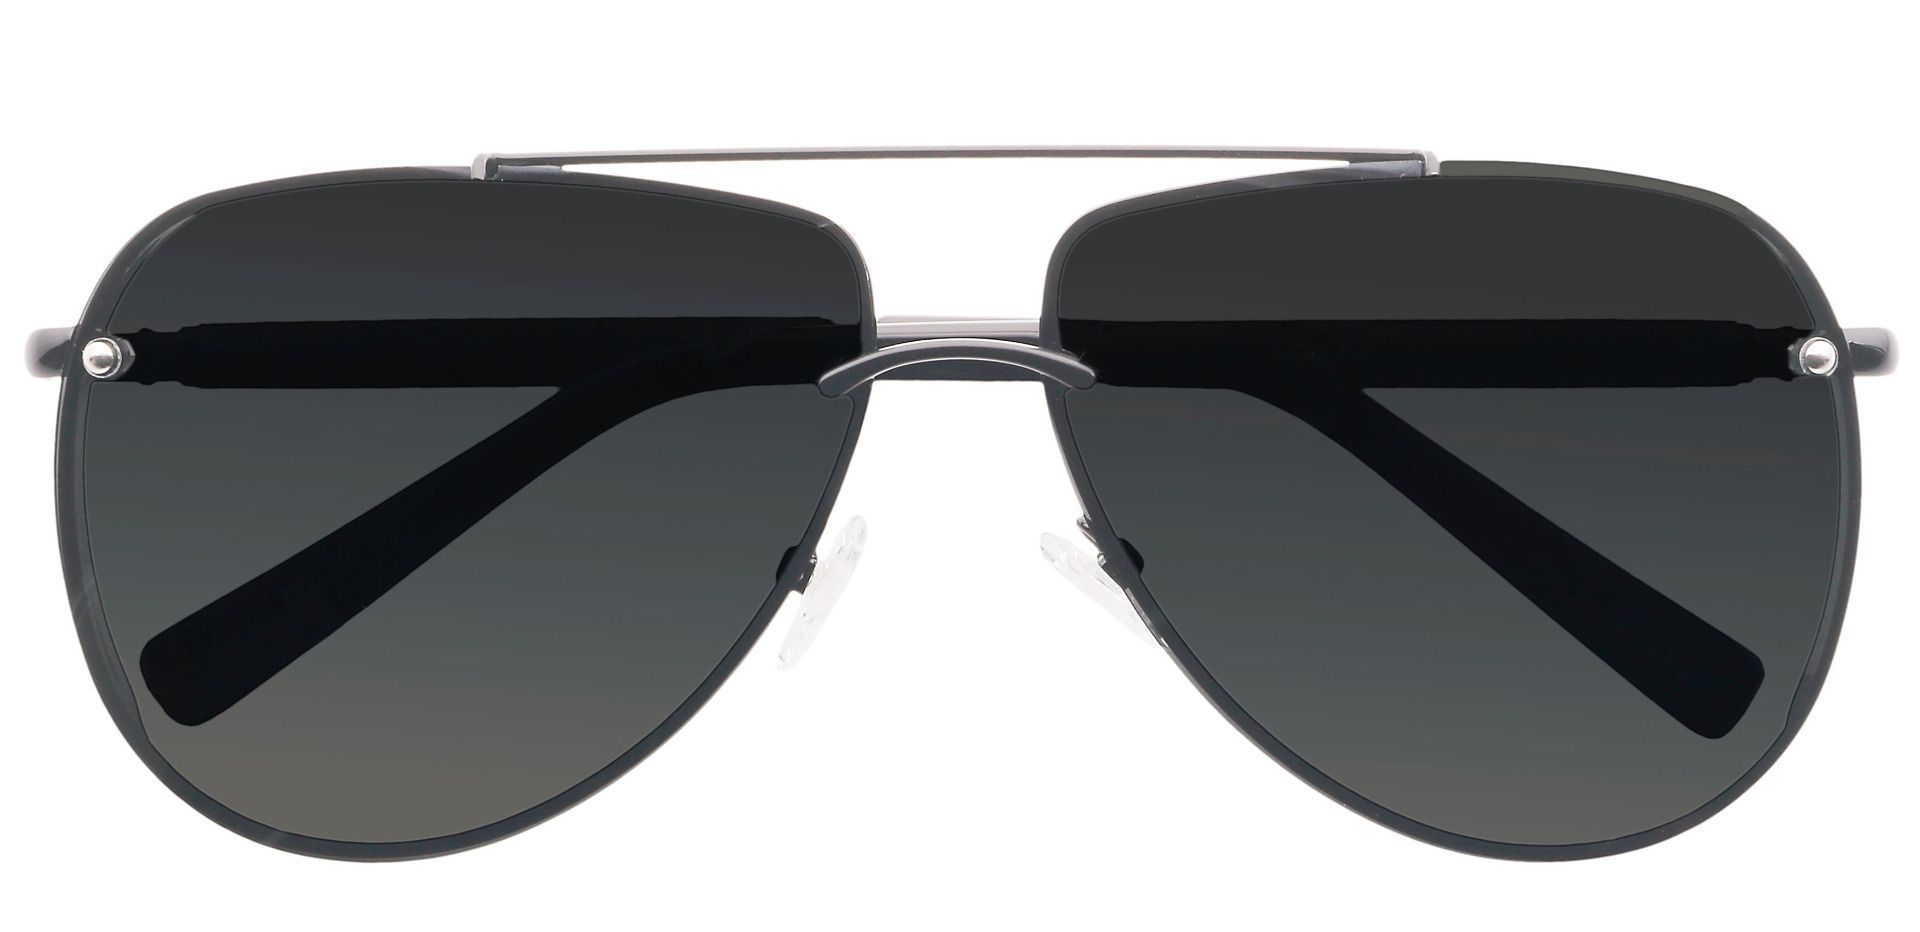 Artie Aviator Non-Rx Sunglasses - Black Frame With Gray Lenses